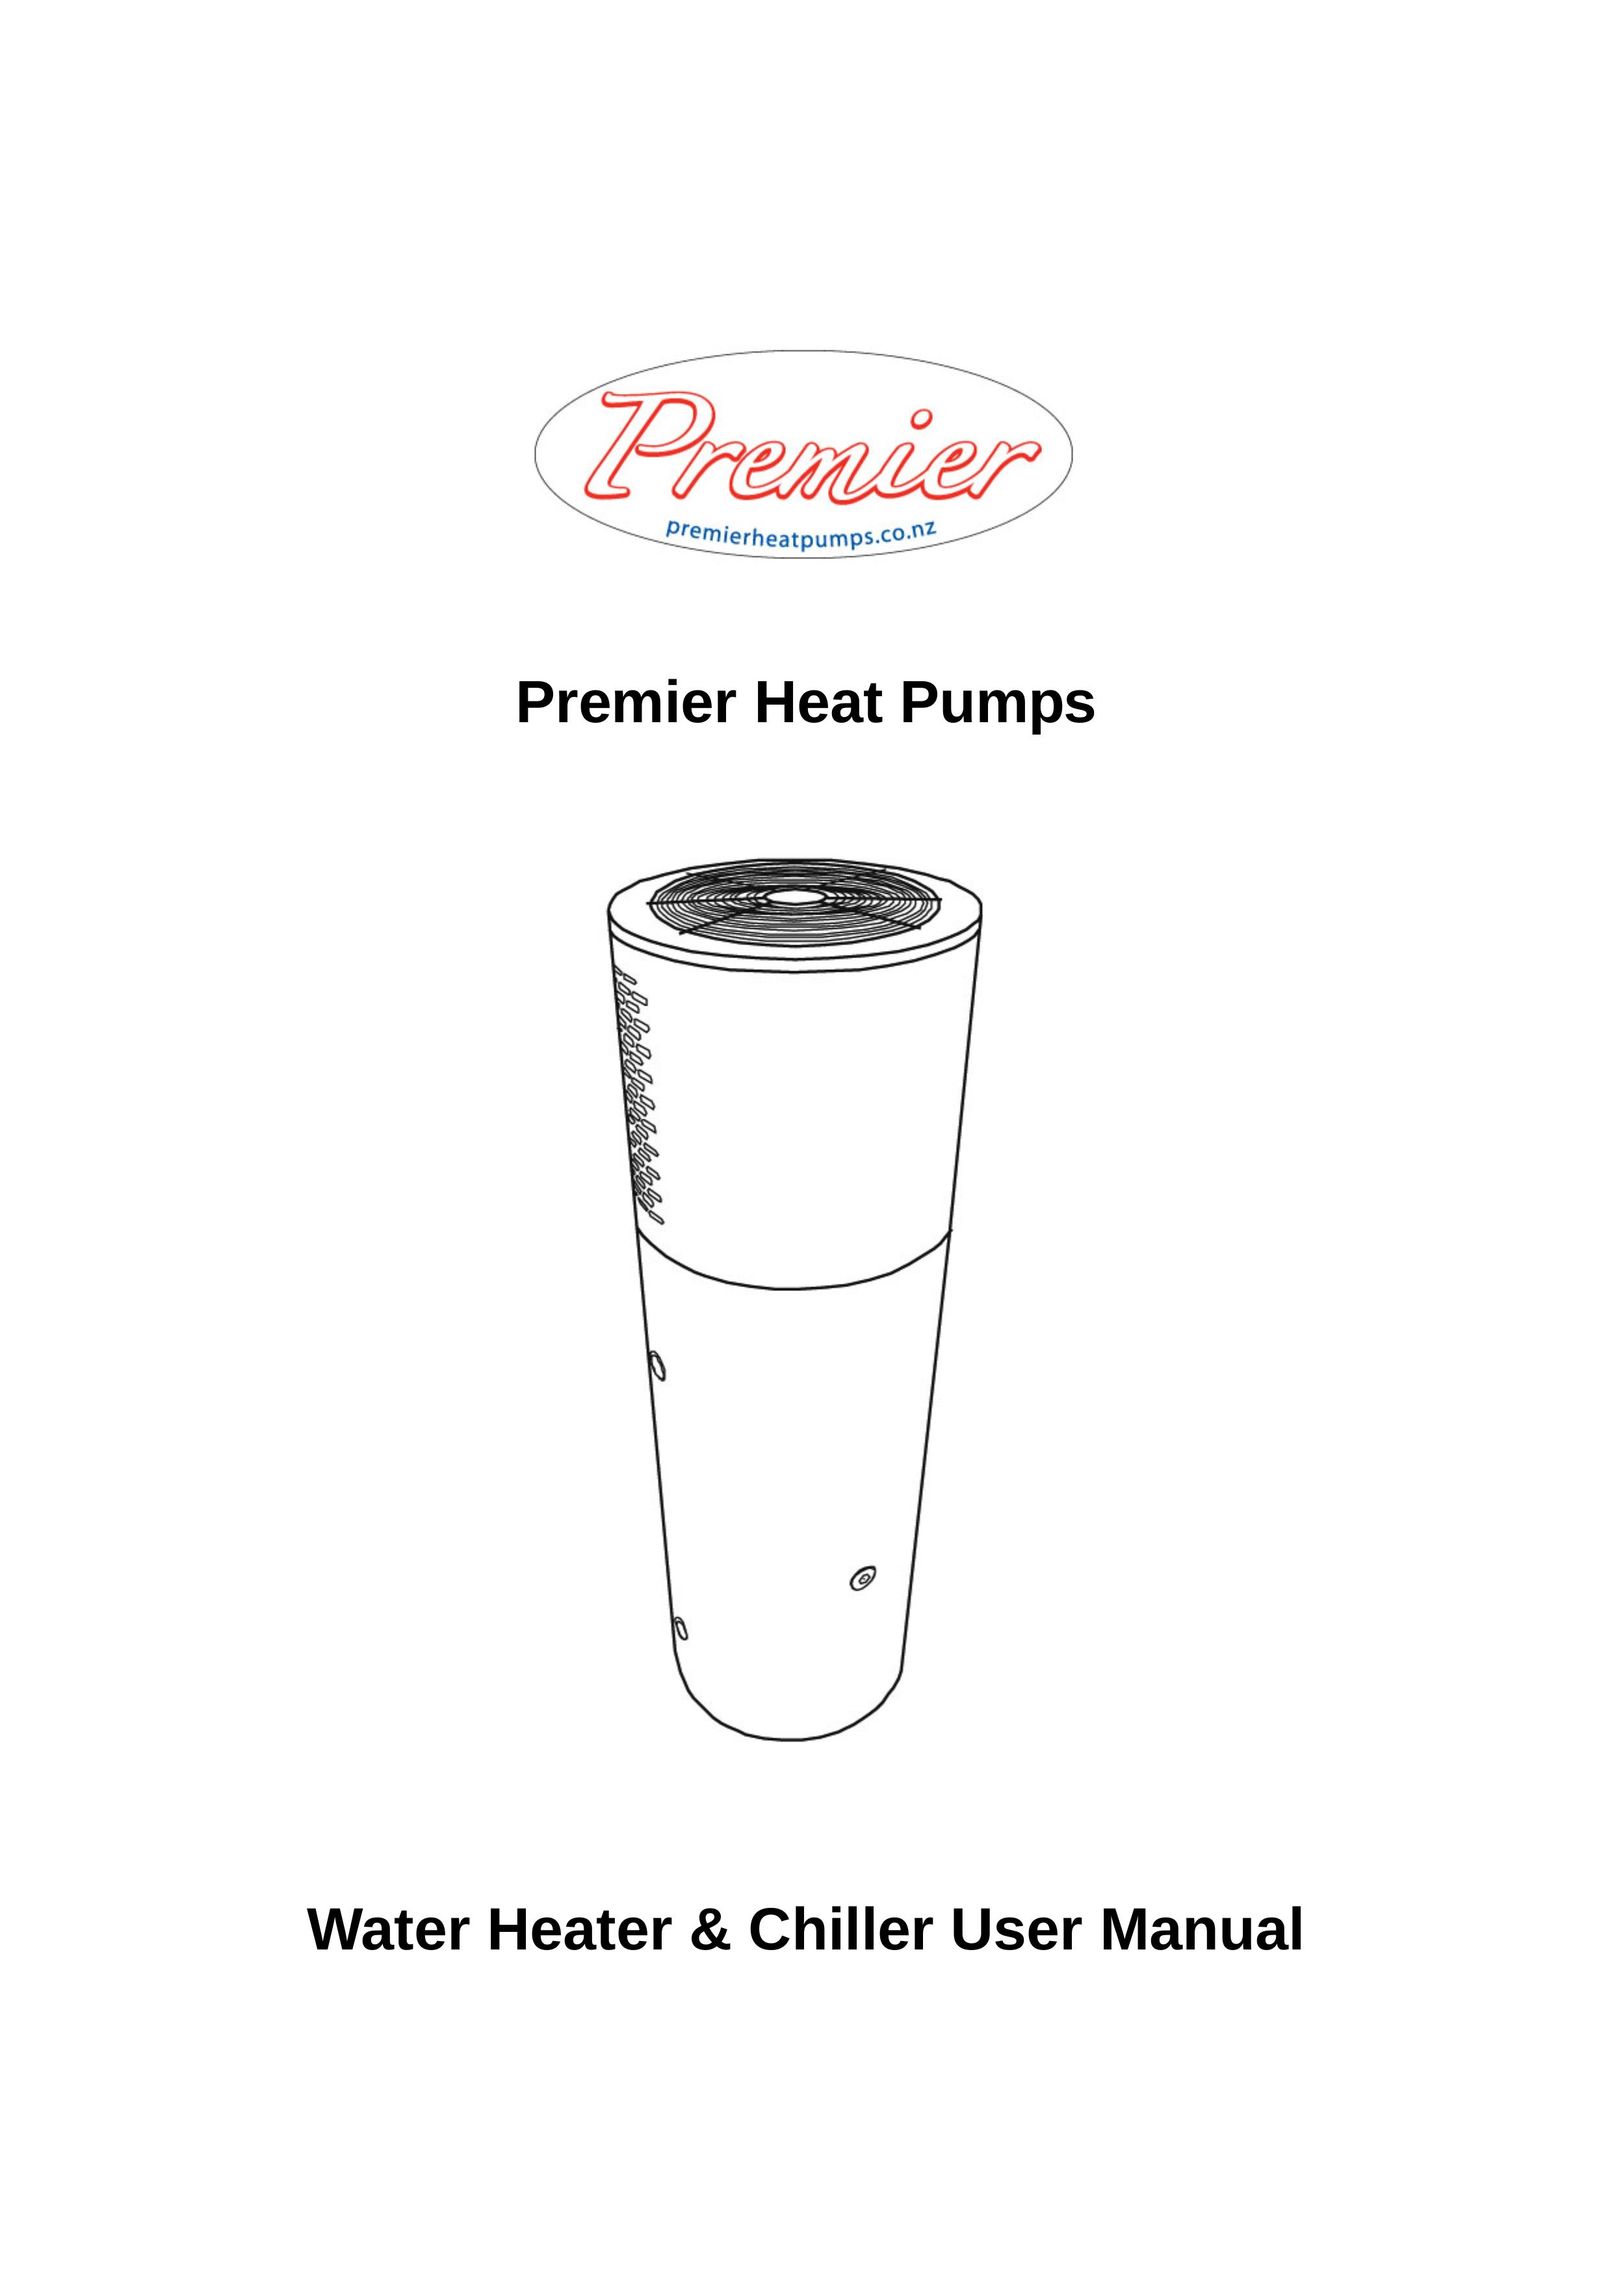 Premier PHP HWC-260 Heat Pump User Manual